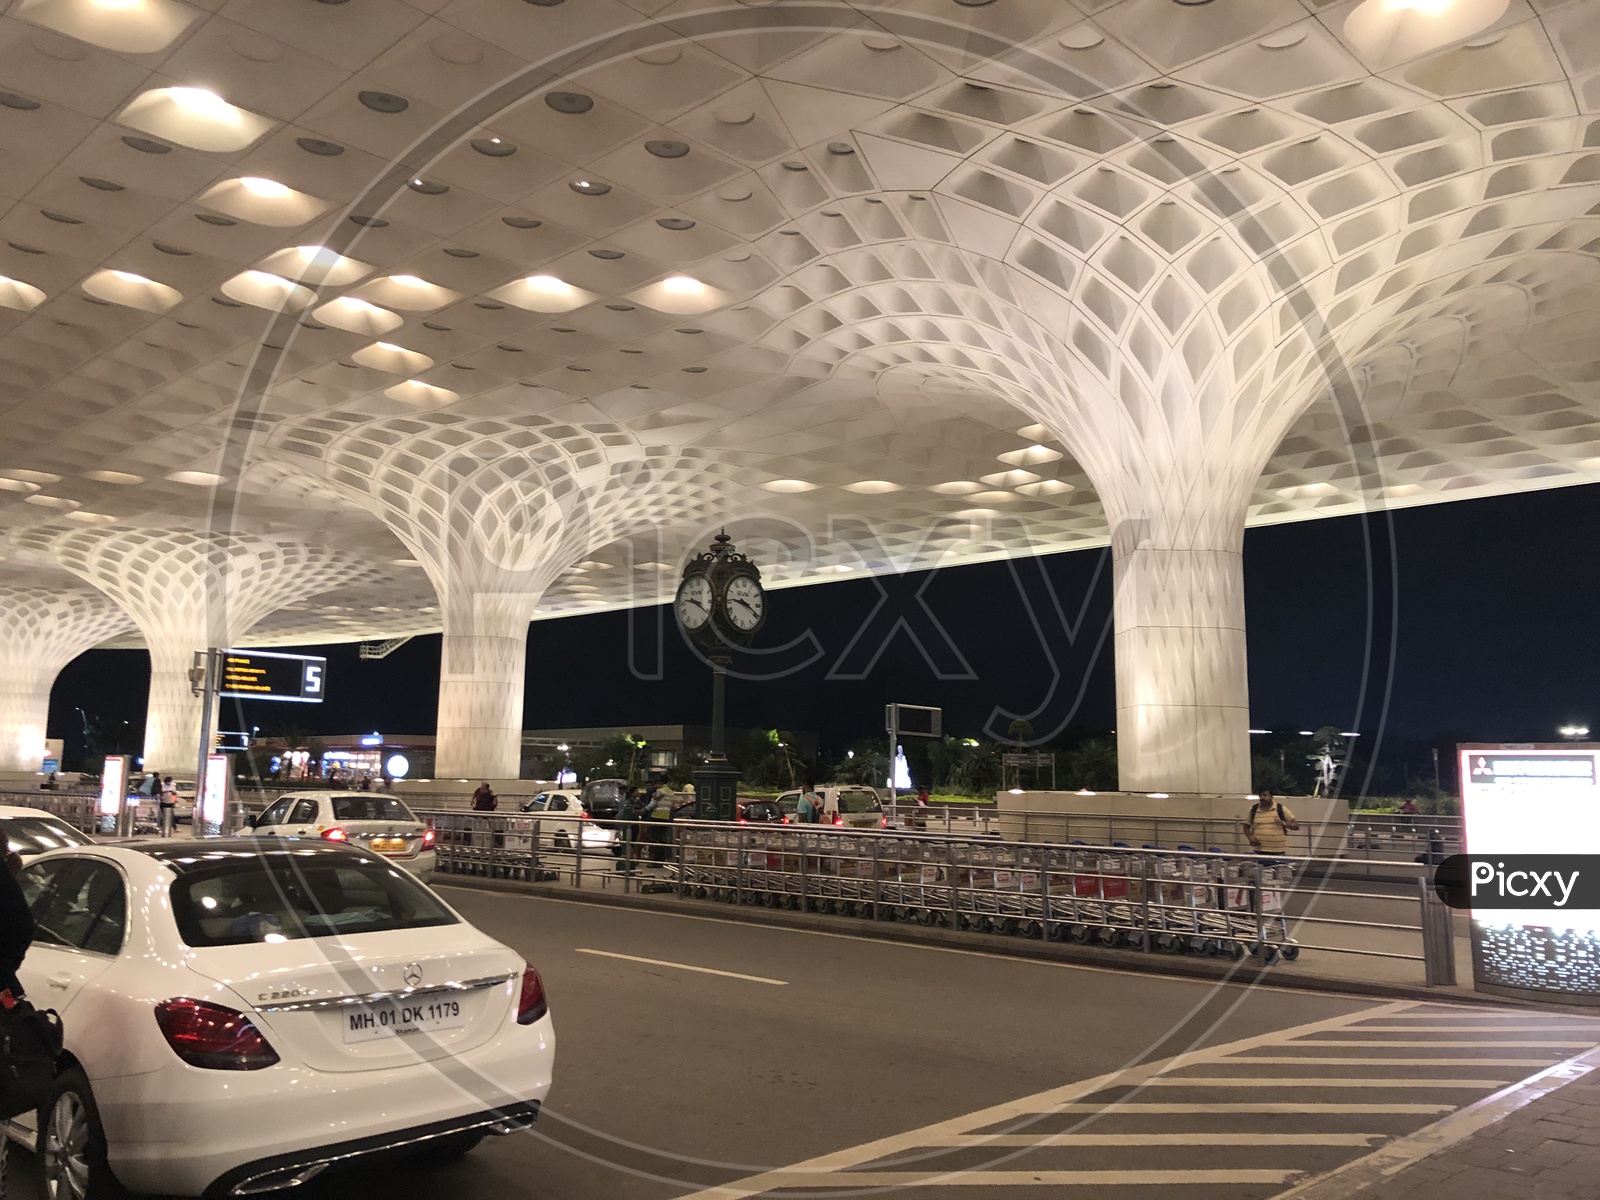 Architecture of Mumbai Airport With  Roof Design